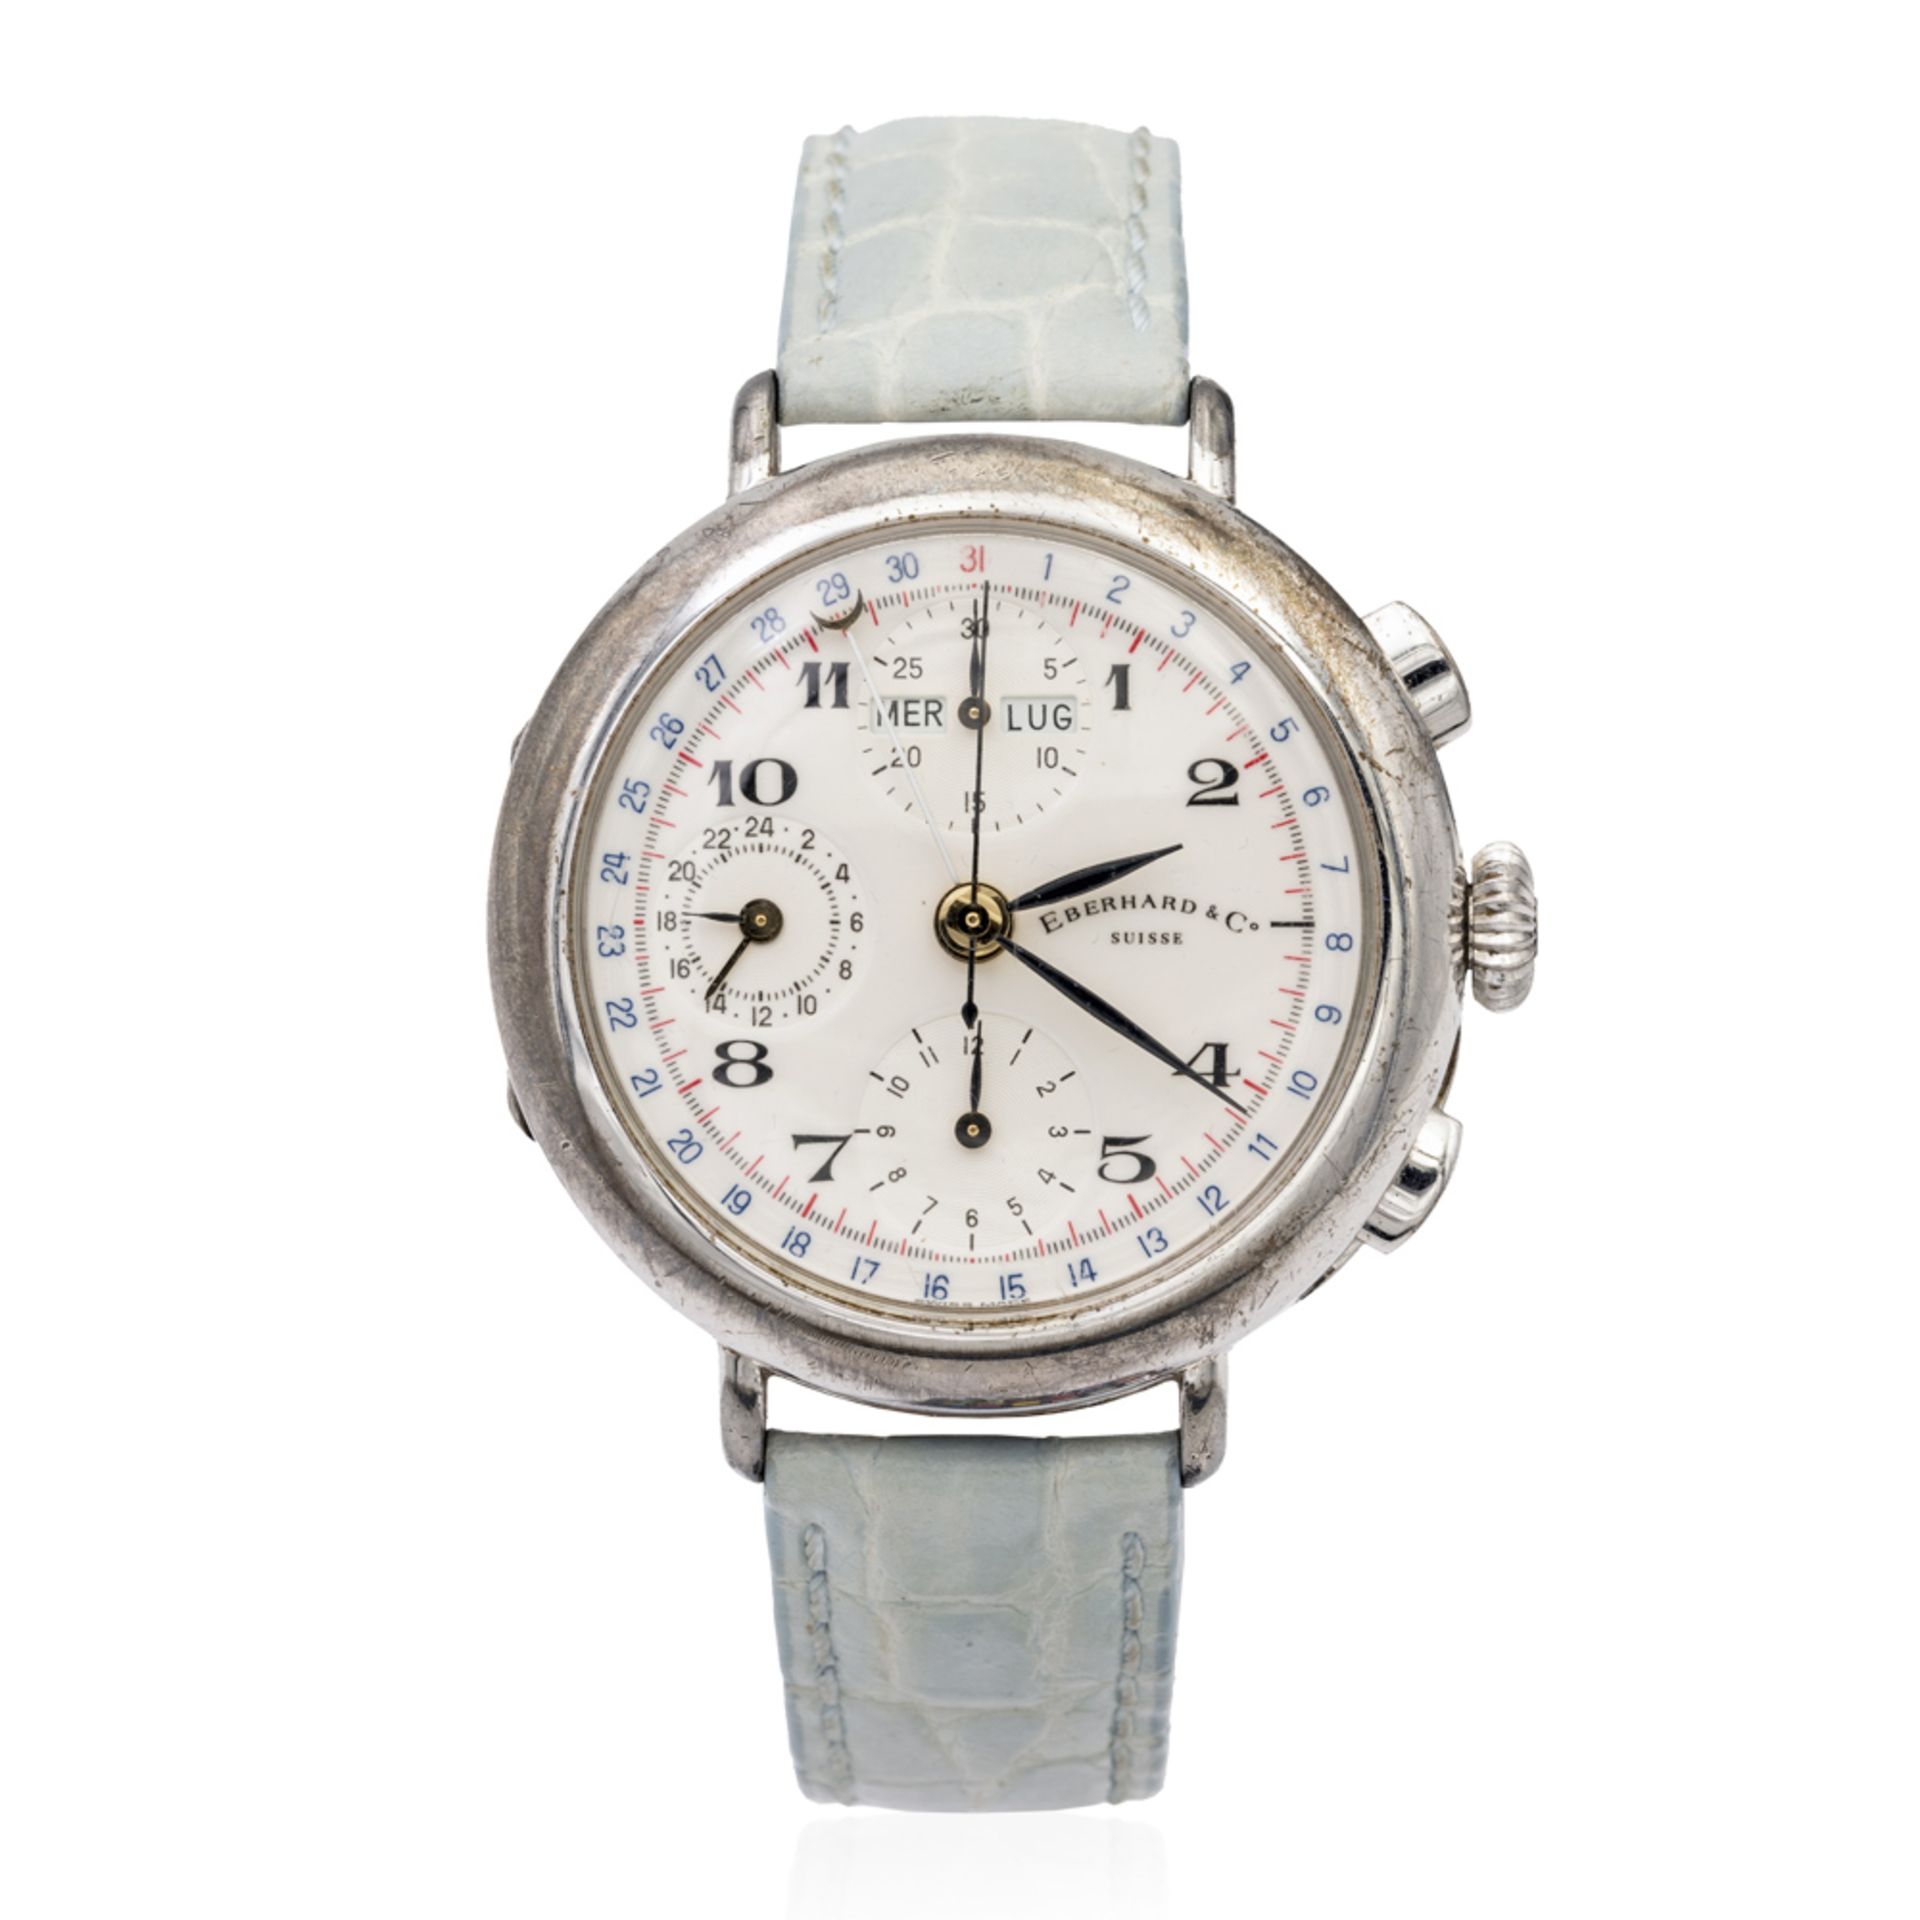 Eberhard & Co. Chronograph "Replica" wristwatch